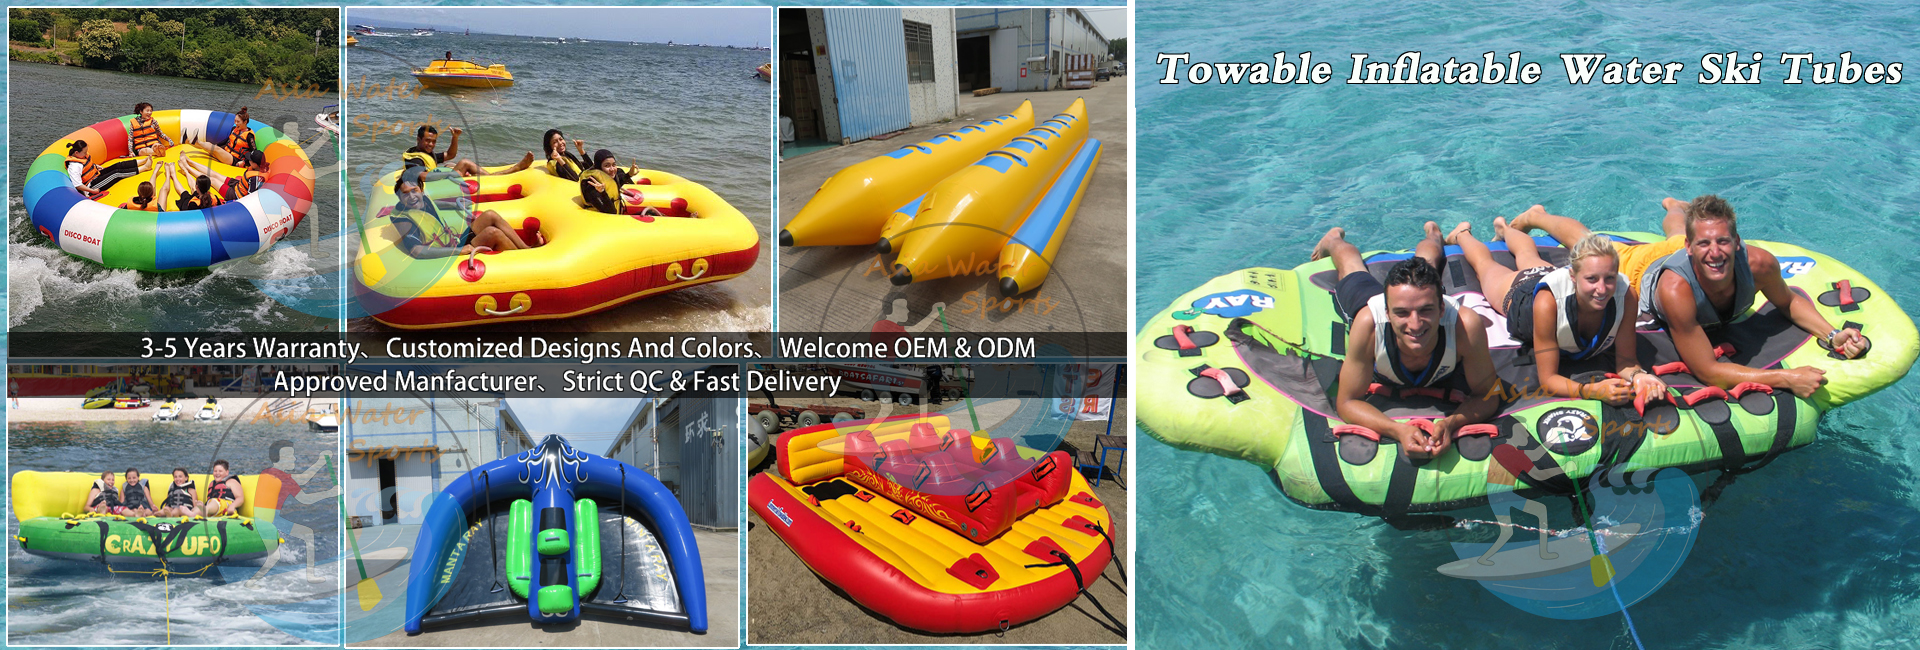 Towable Inflatable Water Ski Tubes, UFO Sofa, Disco Boat, Manta Ray Tubes & Bananas